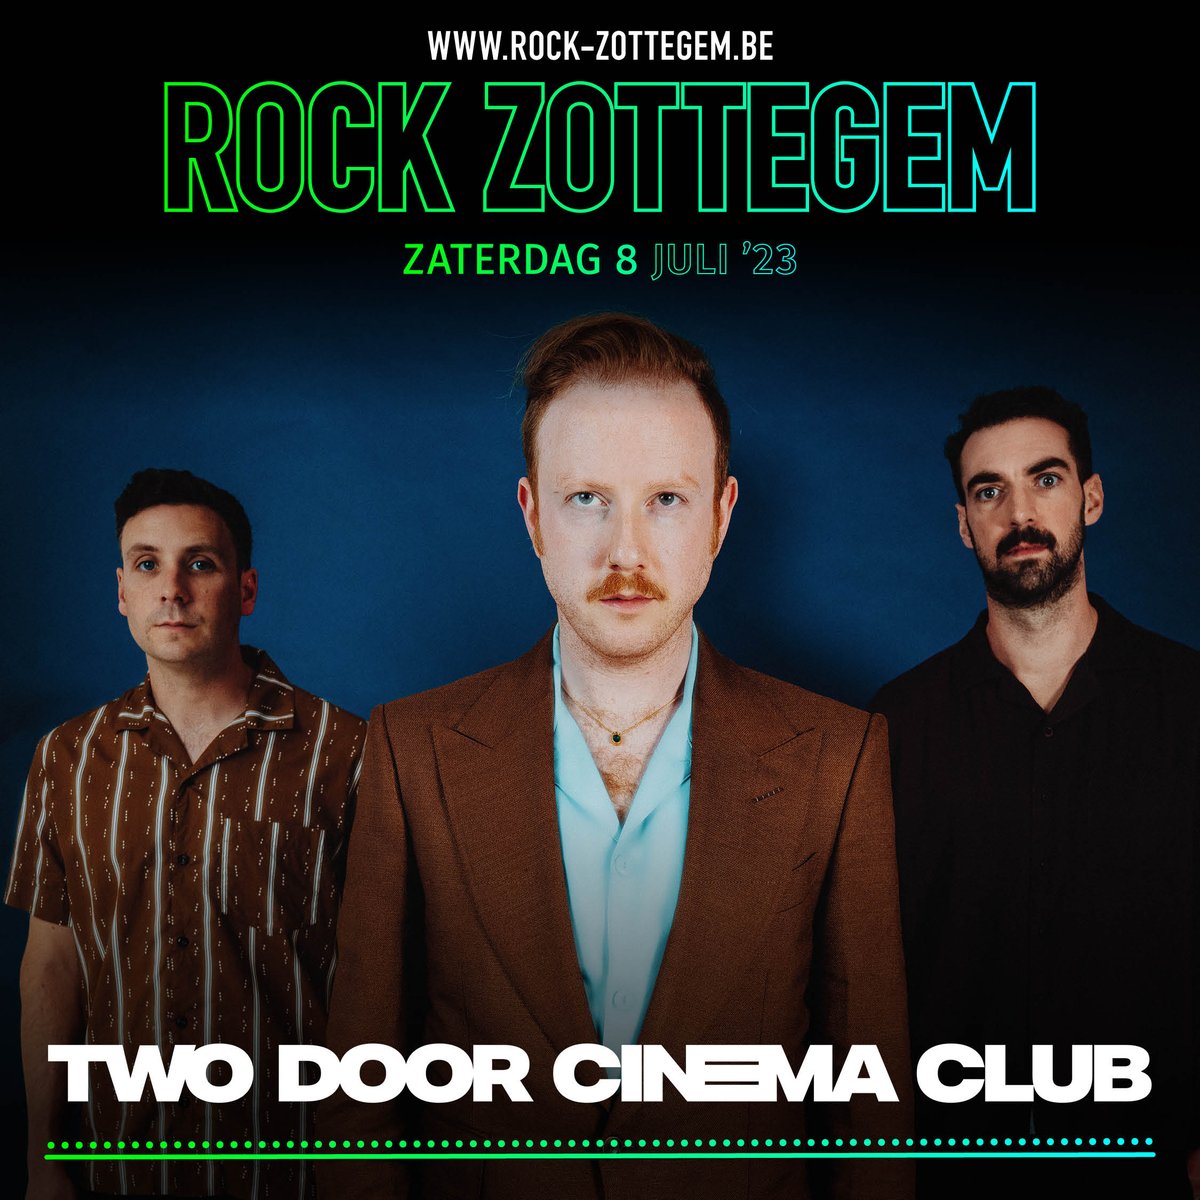 Two Door Cinema Club (@TDCinemaClub) / Twitter